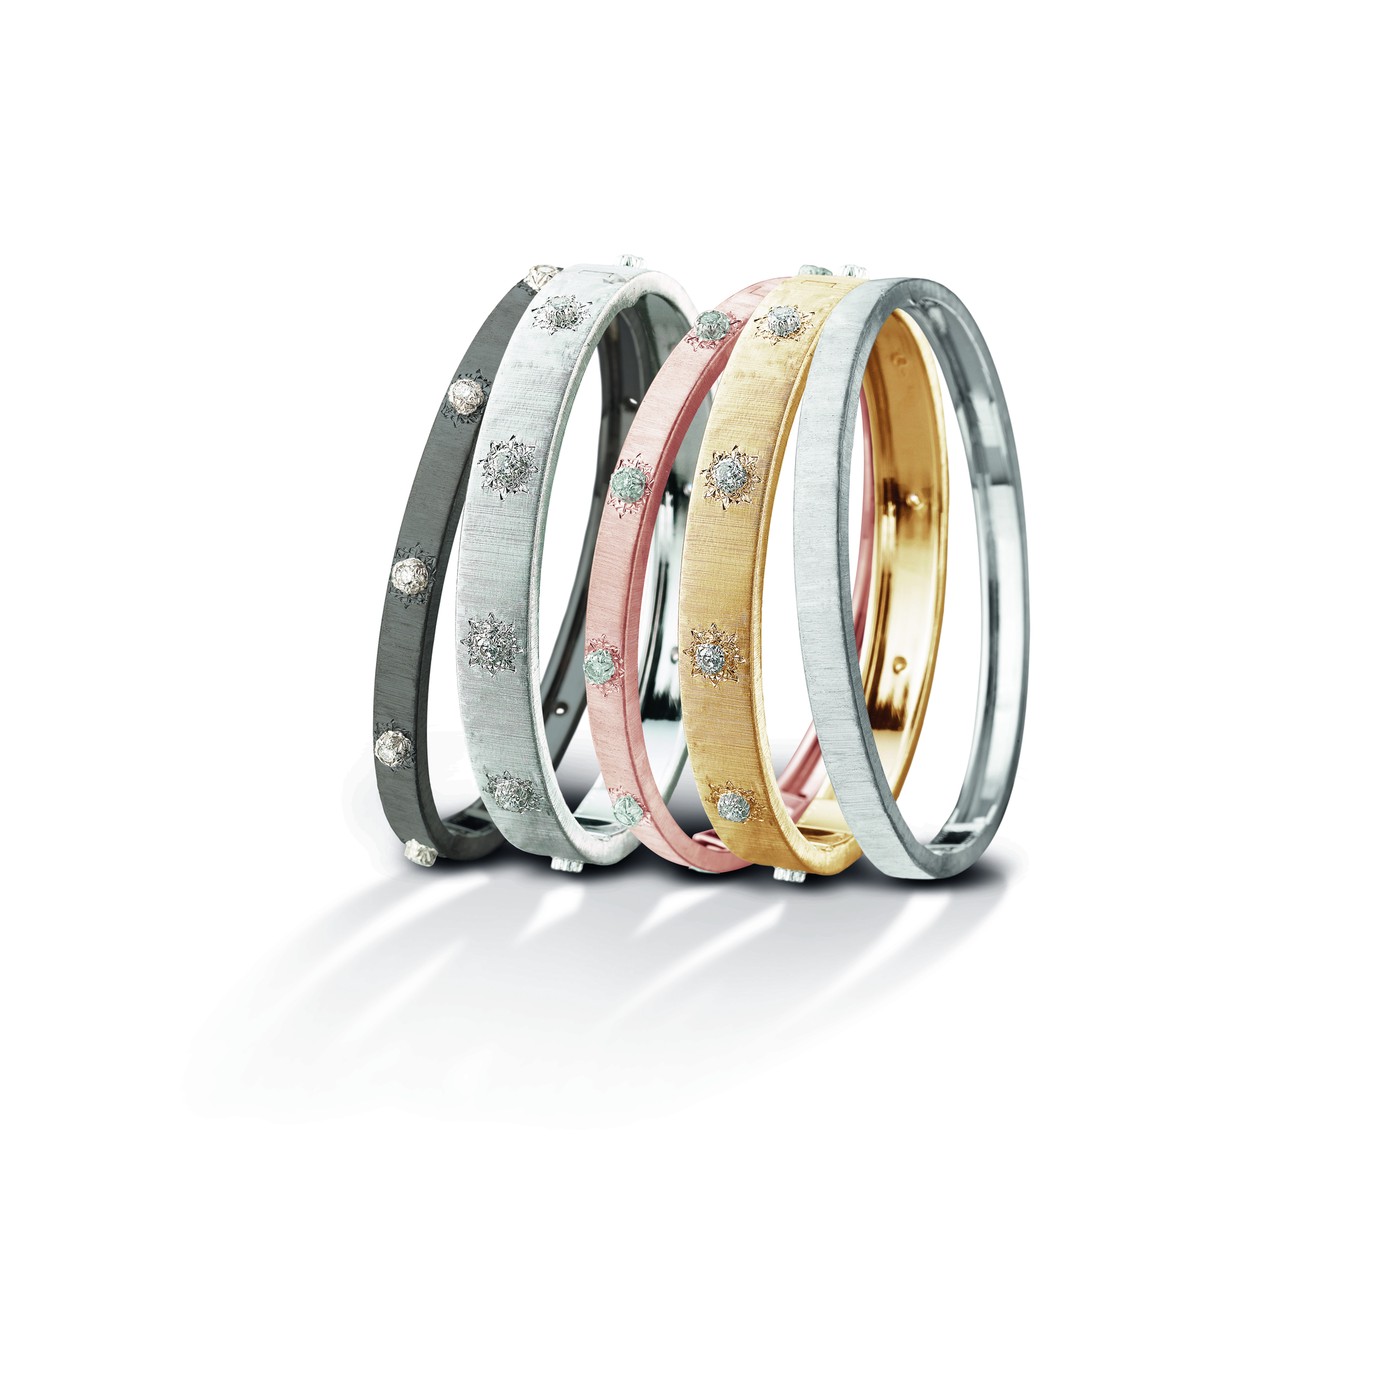 Bracelets Macri Classica en or jaune, or blanc, or rose et or noir sertis de diamants